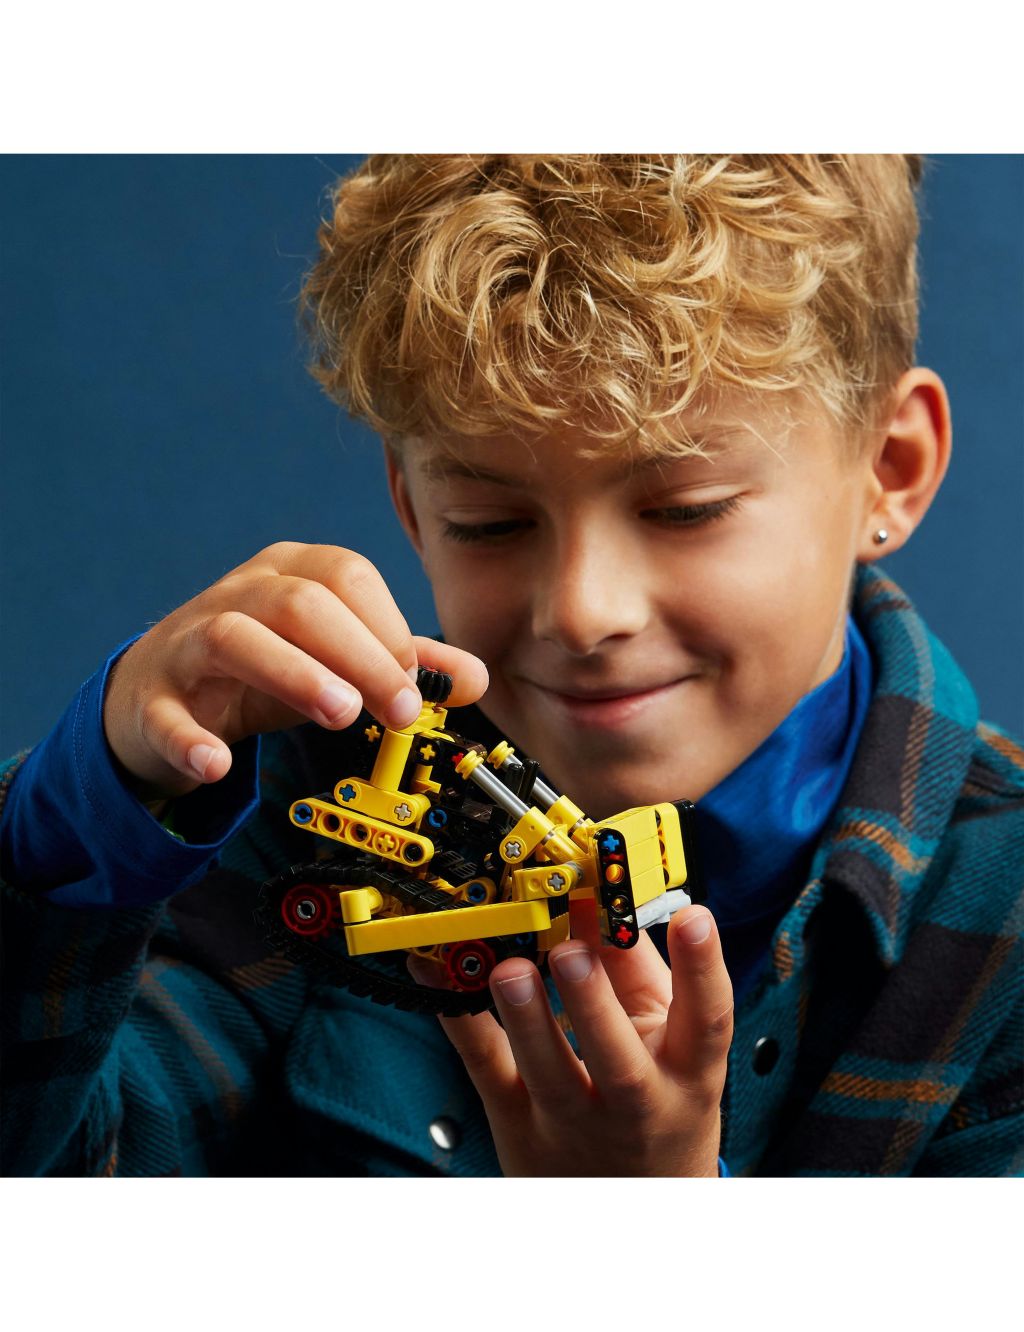 LEGO® Technic Heavy-Duty Bulldozer Set 42163 (7+ Yrs) 1 of 4